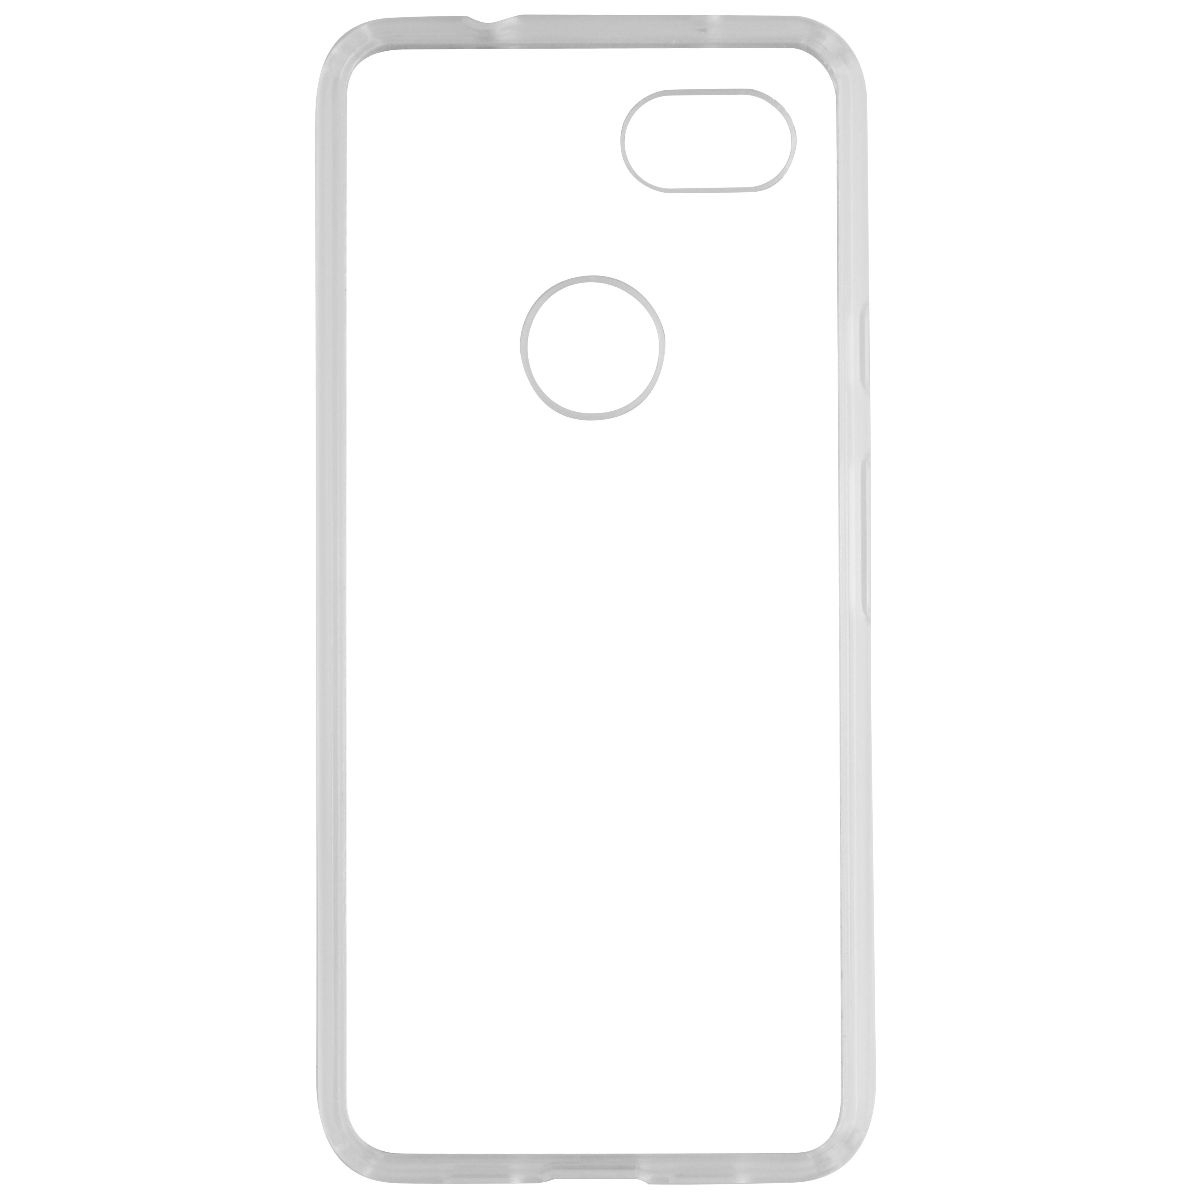 UBREAKIFIX Slim Hardshell Case For Google Pixel 3a Smartphones - Clear